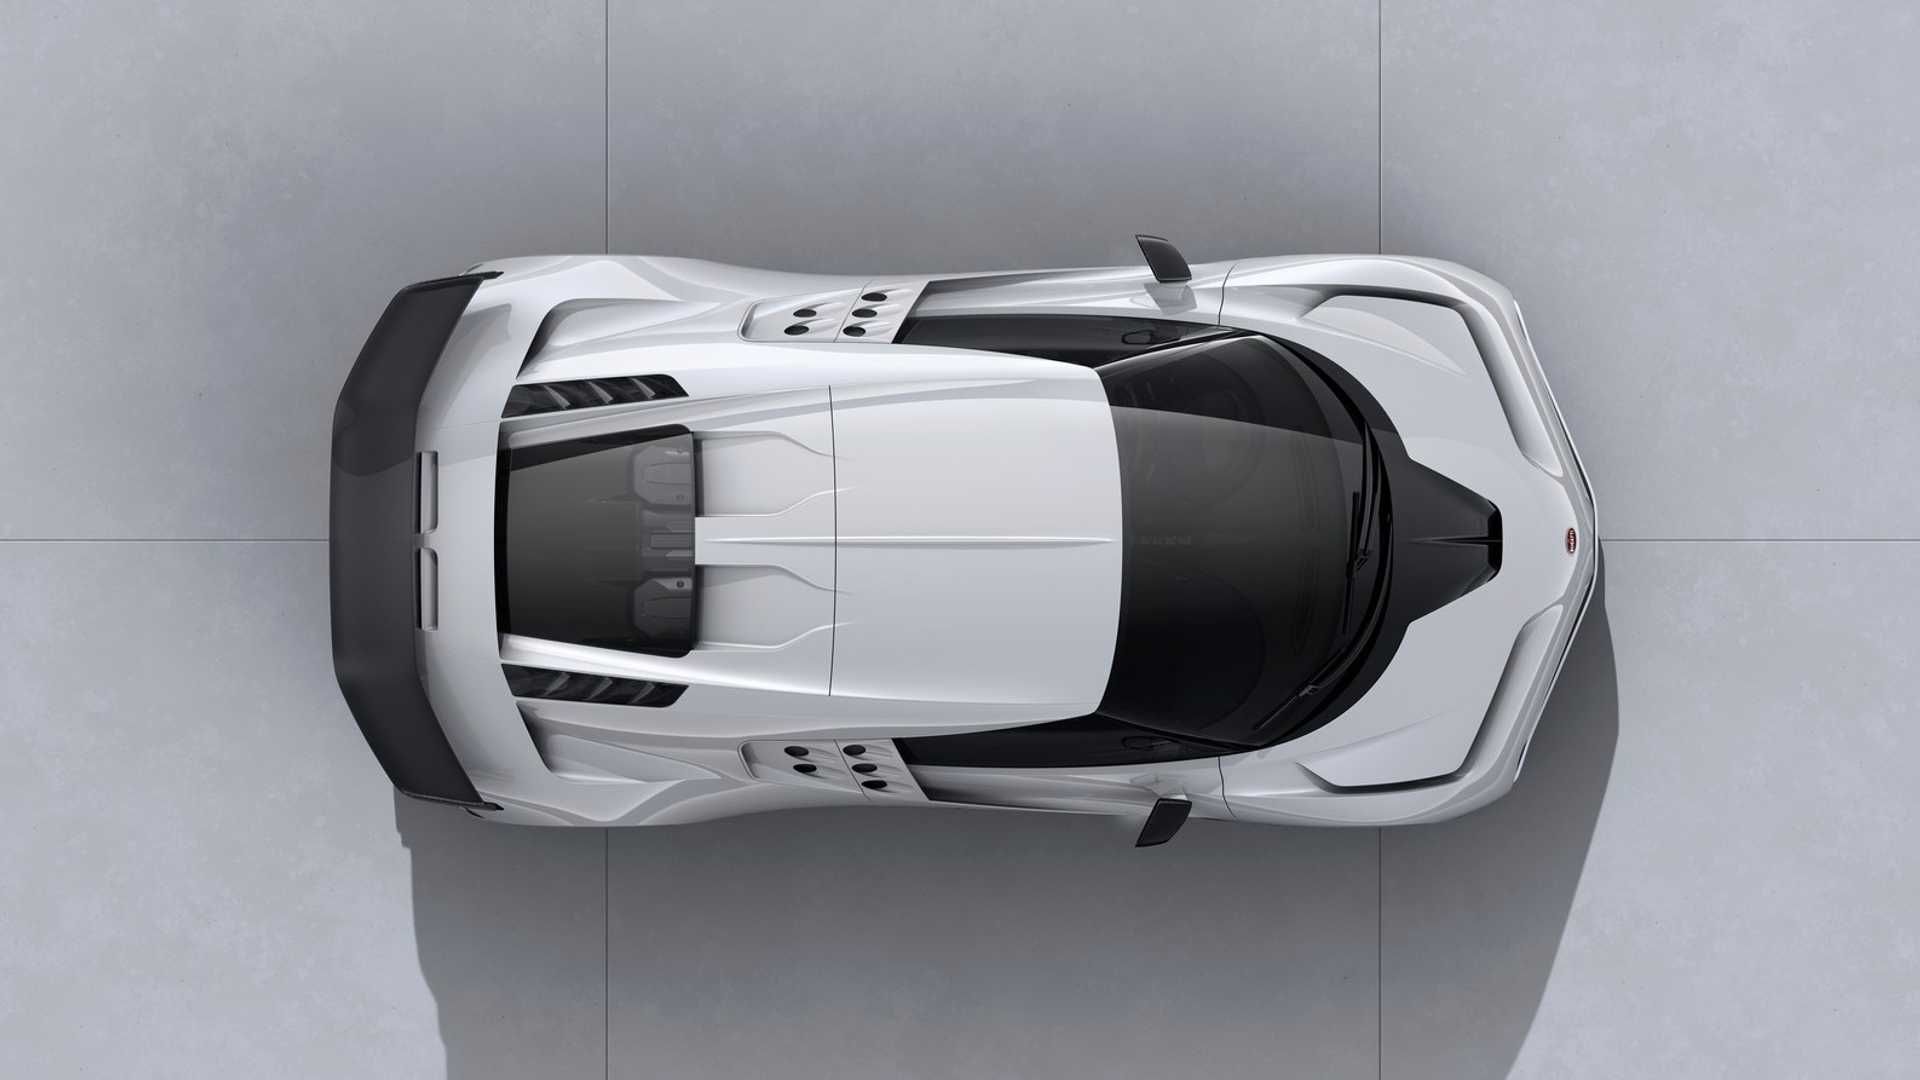 مرجع متخصصين ايران نماي بالا ابرخودرو بوگاتي سنتودايچي / Bugatti Centodieci hypercar سفيد رنگ